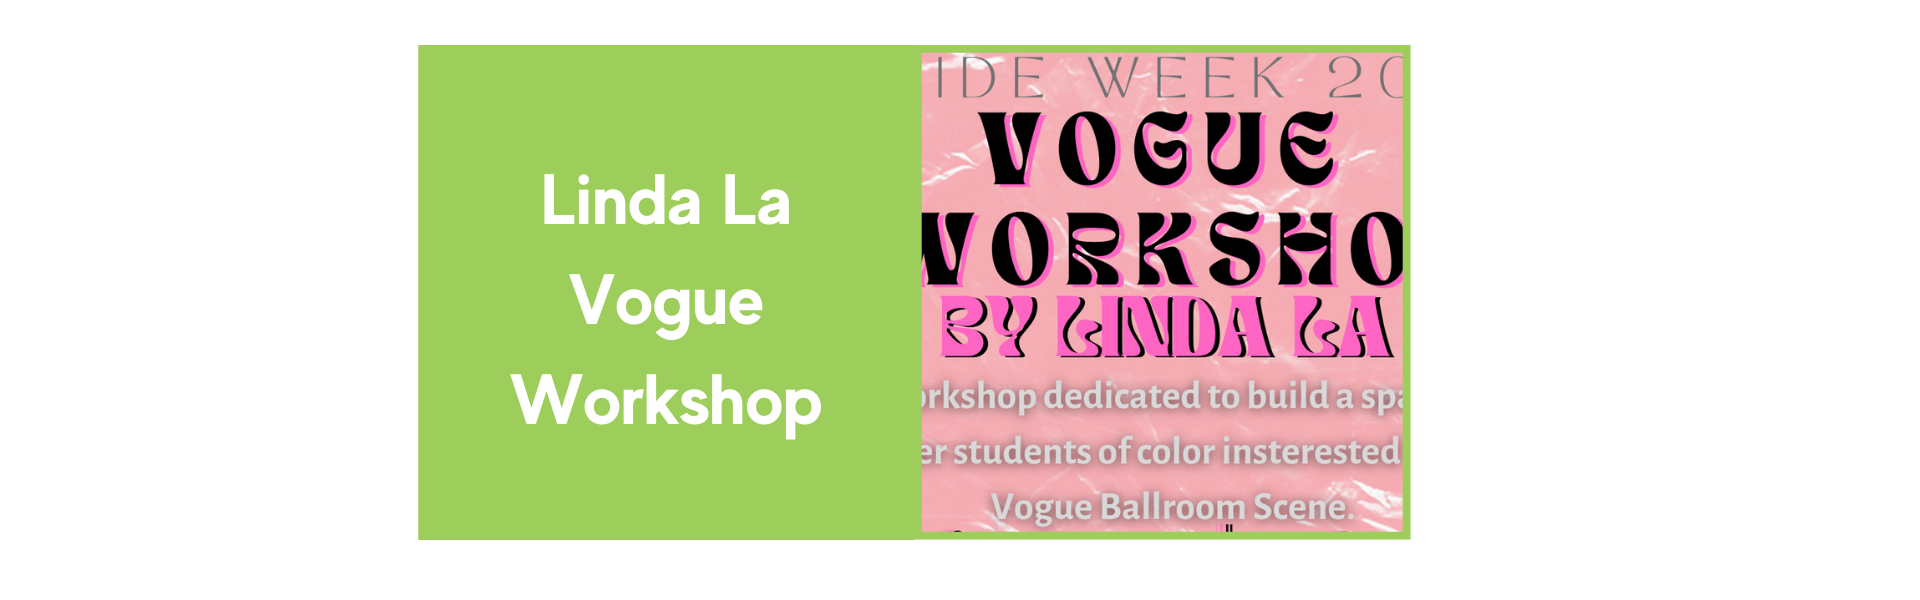 Linda-La-Vogue-Workshop.png